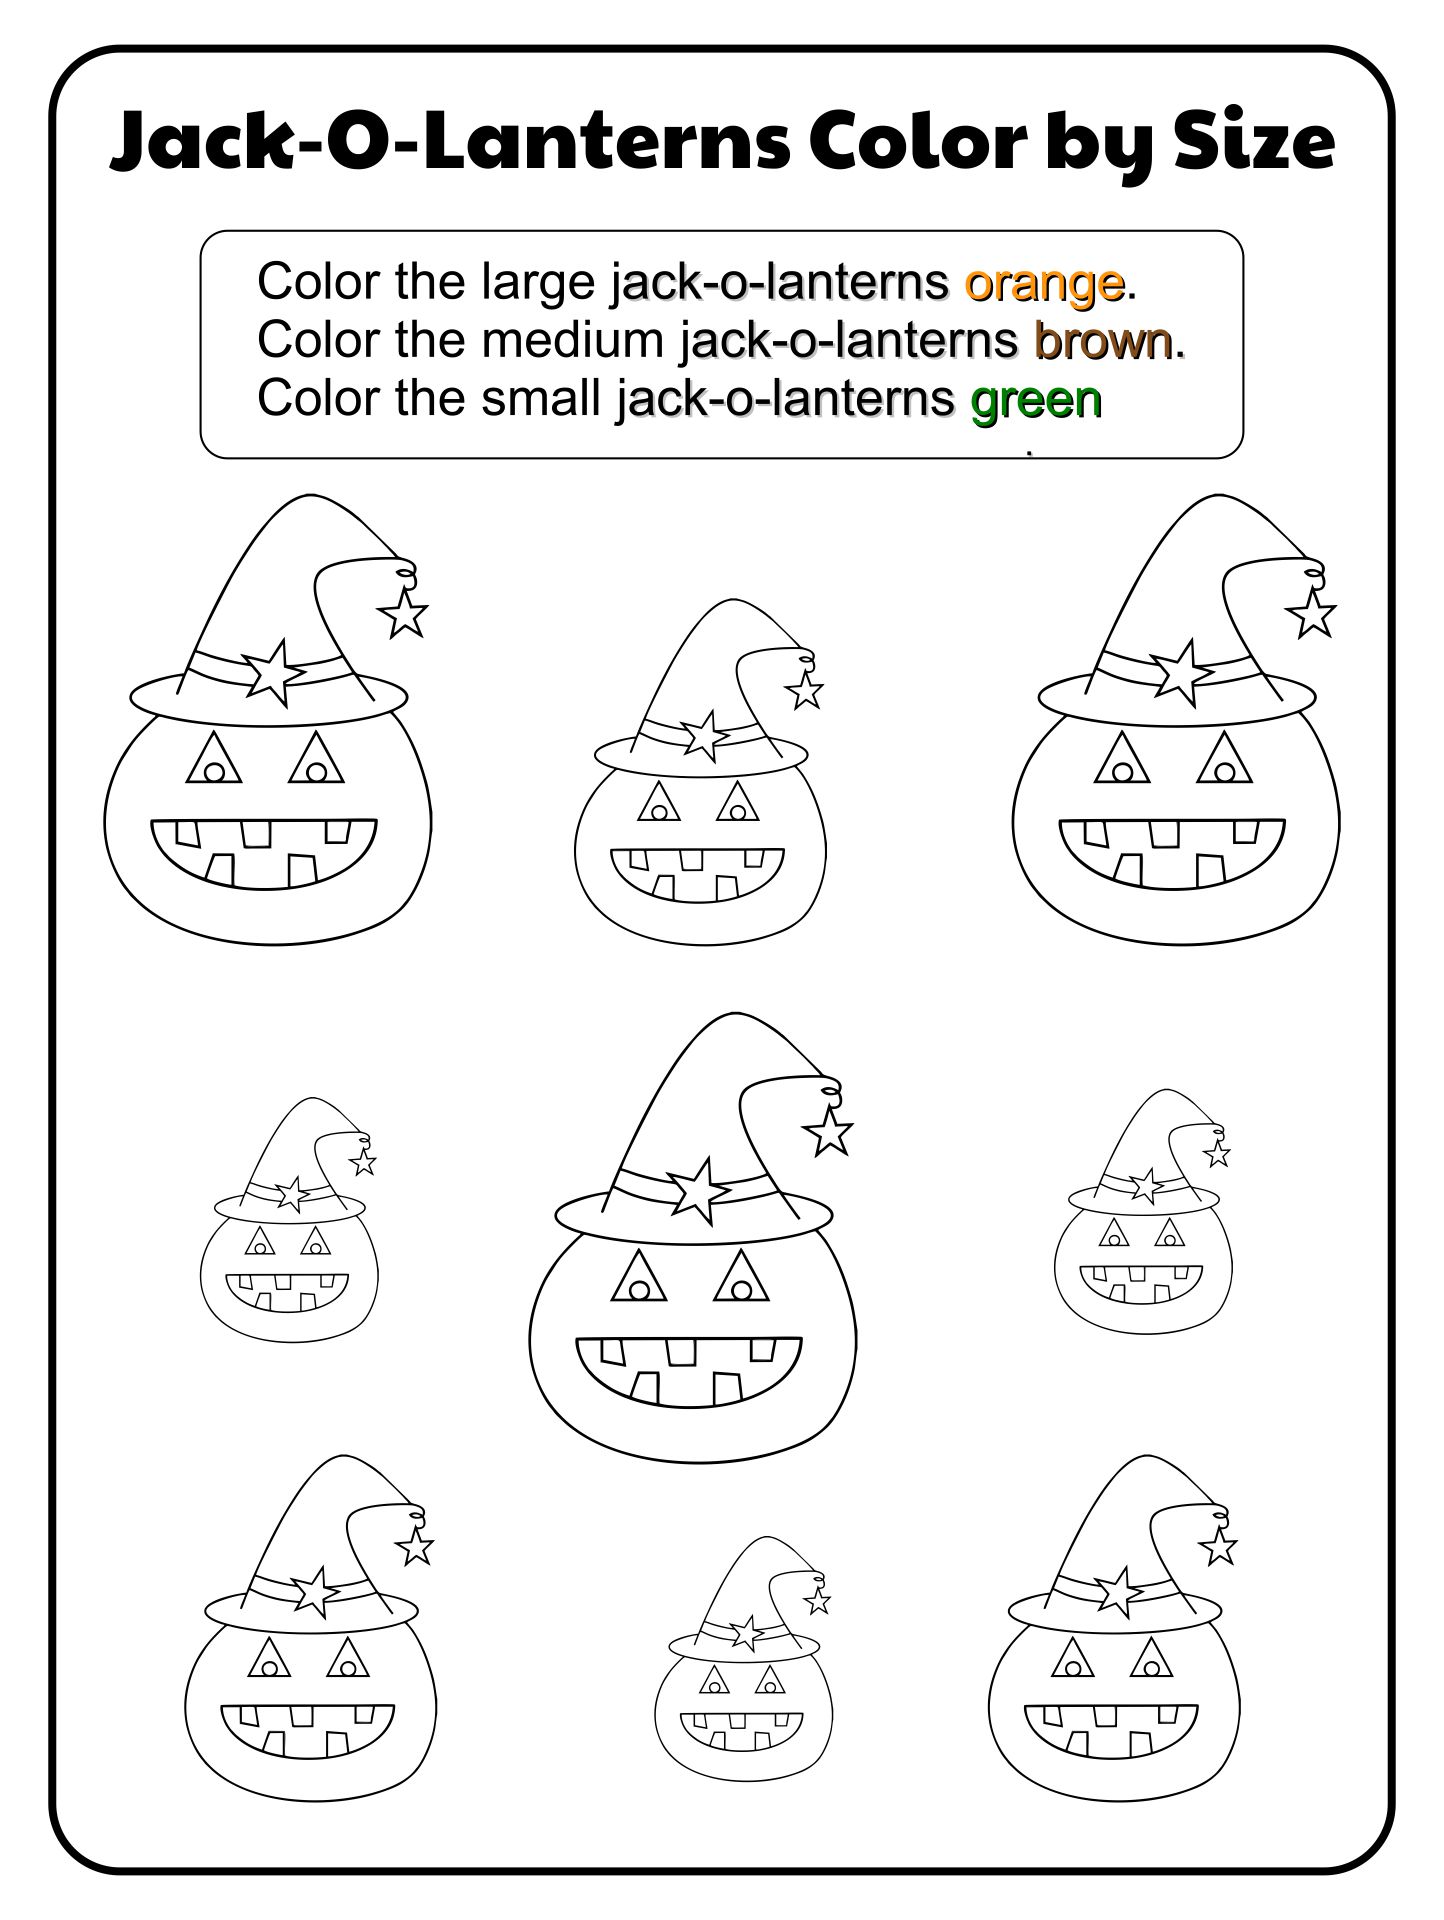 Halloween Activity Sheets